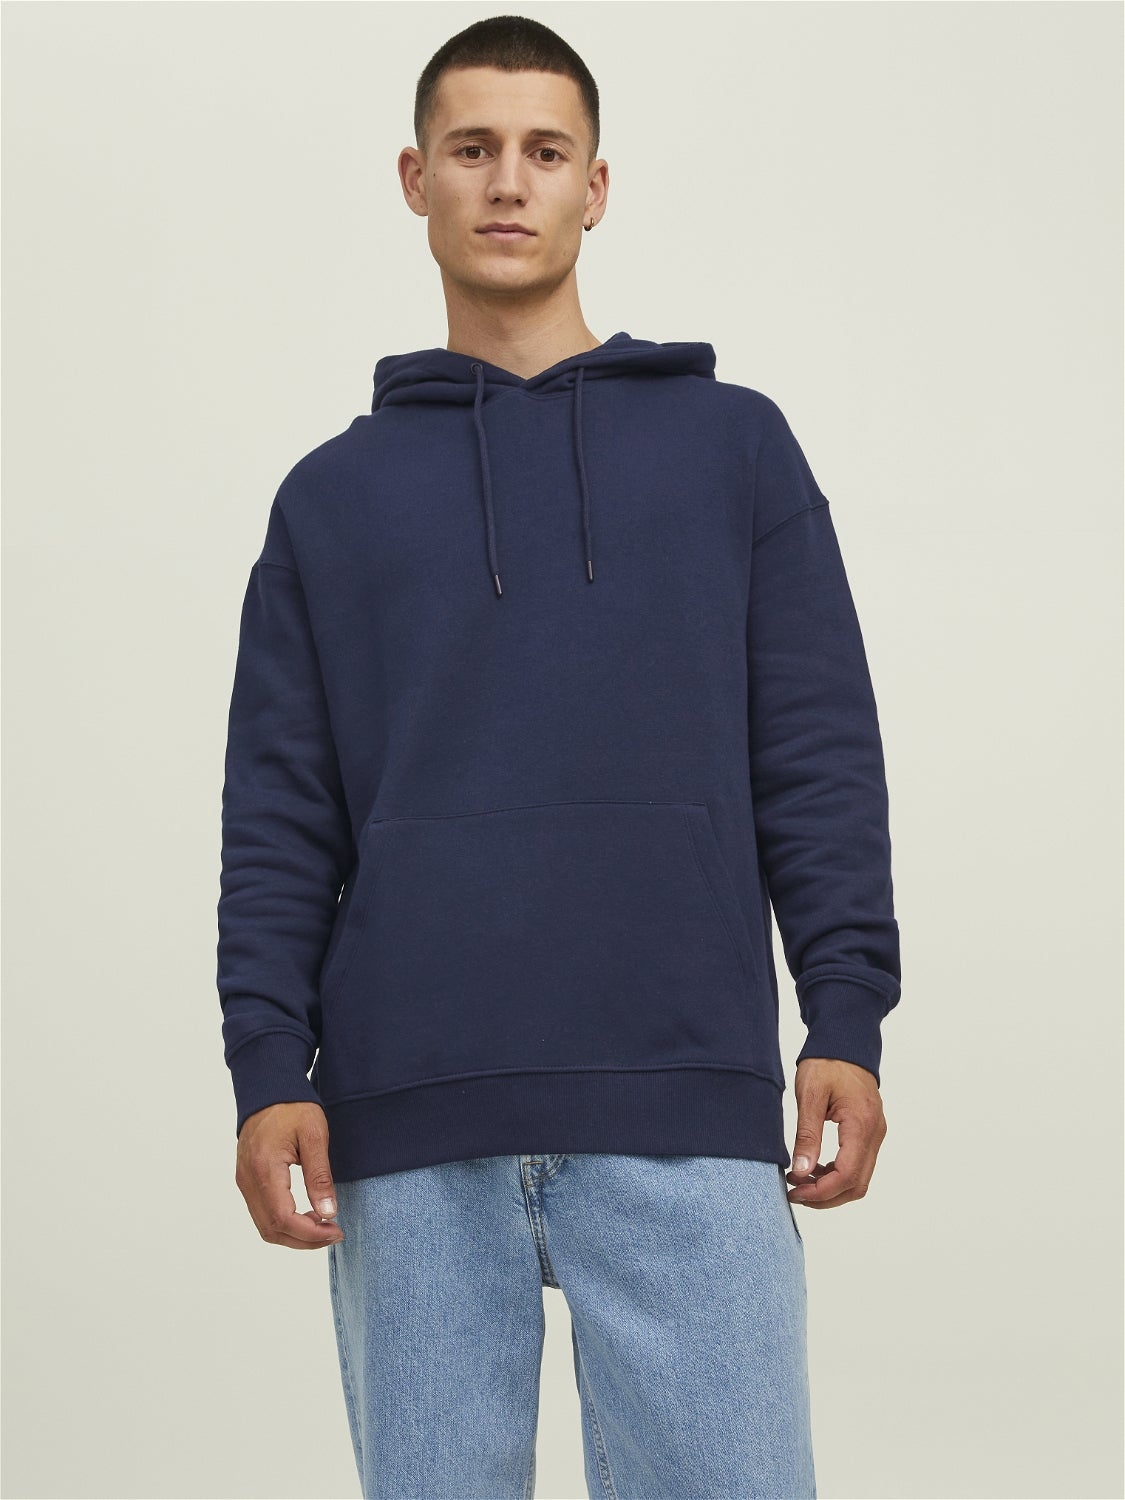 Blau/Dunkelblau M Jack & Jones sweatshirt HERREN Pullovers & Sweatshirts Hoodie Rabatt 58 % 